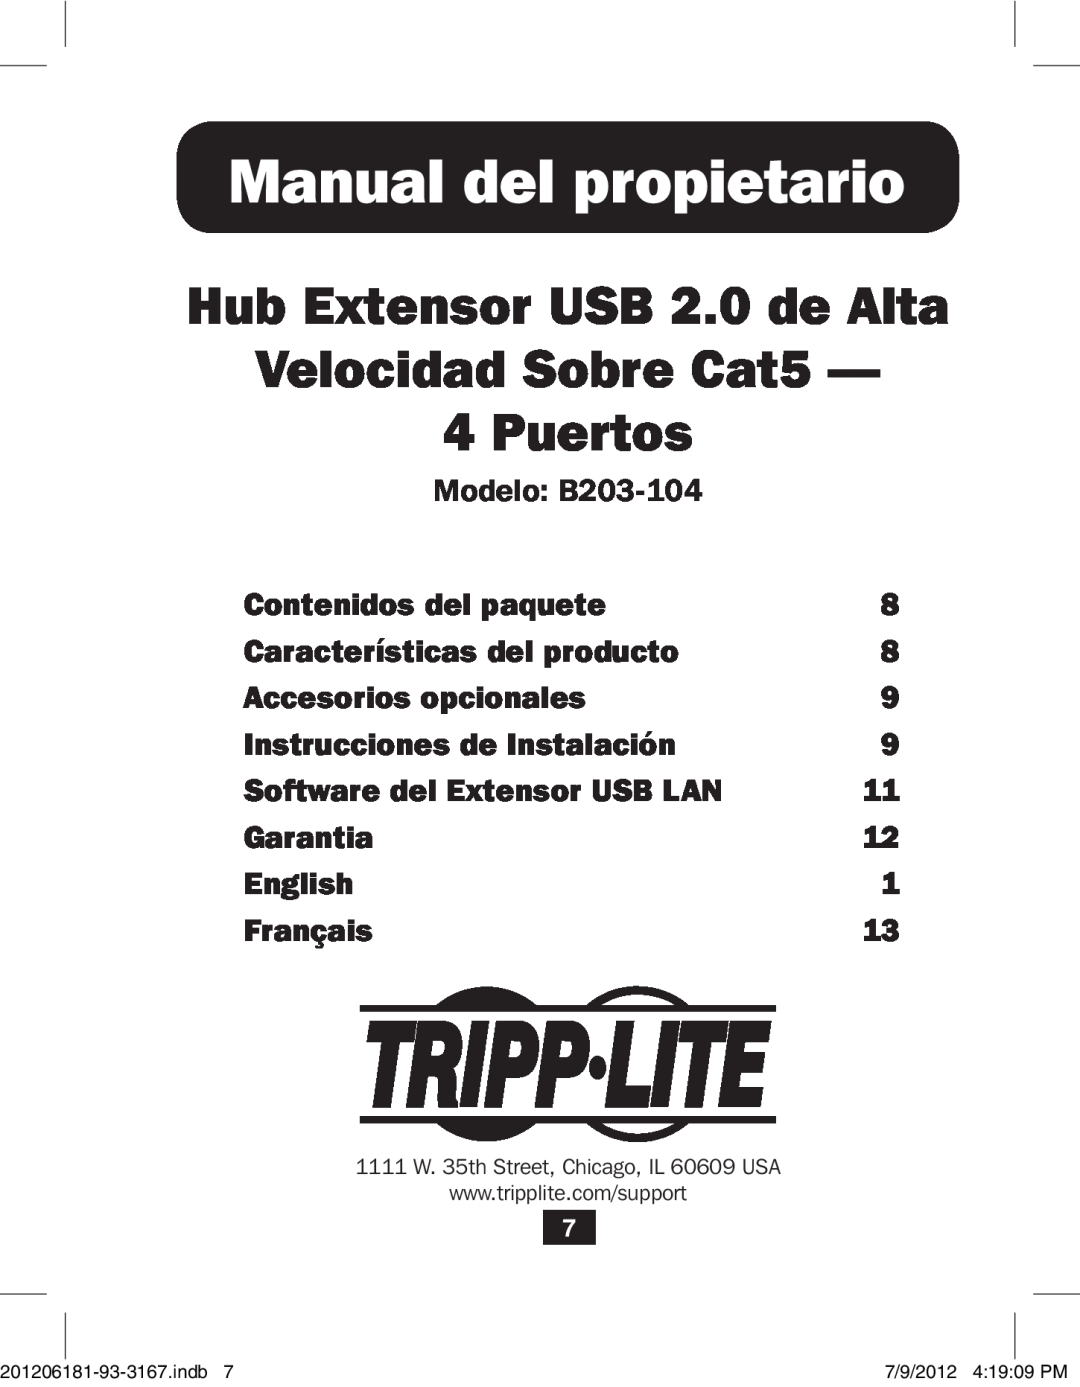 Tripp Lite Manual del propietario, Hub Extensor USB 2.0 de Alta Velocidad Sobre Cat5 4 Puertos, Modelo B203-104 